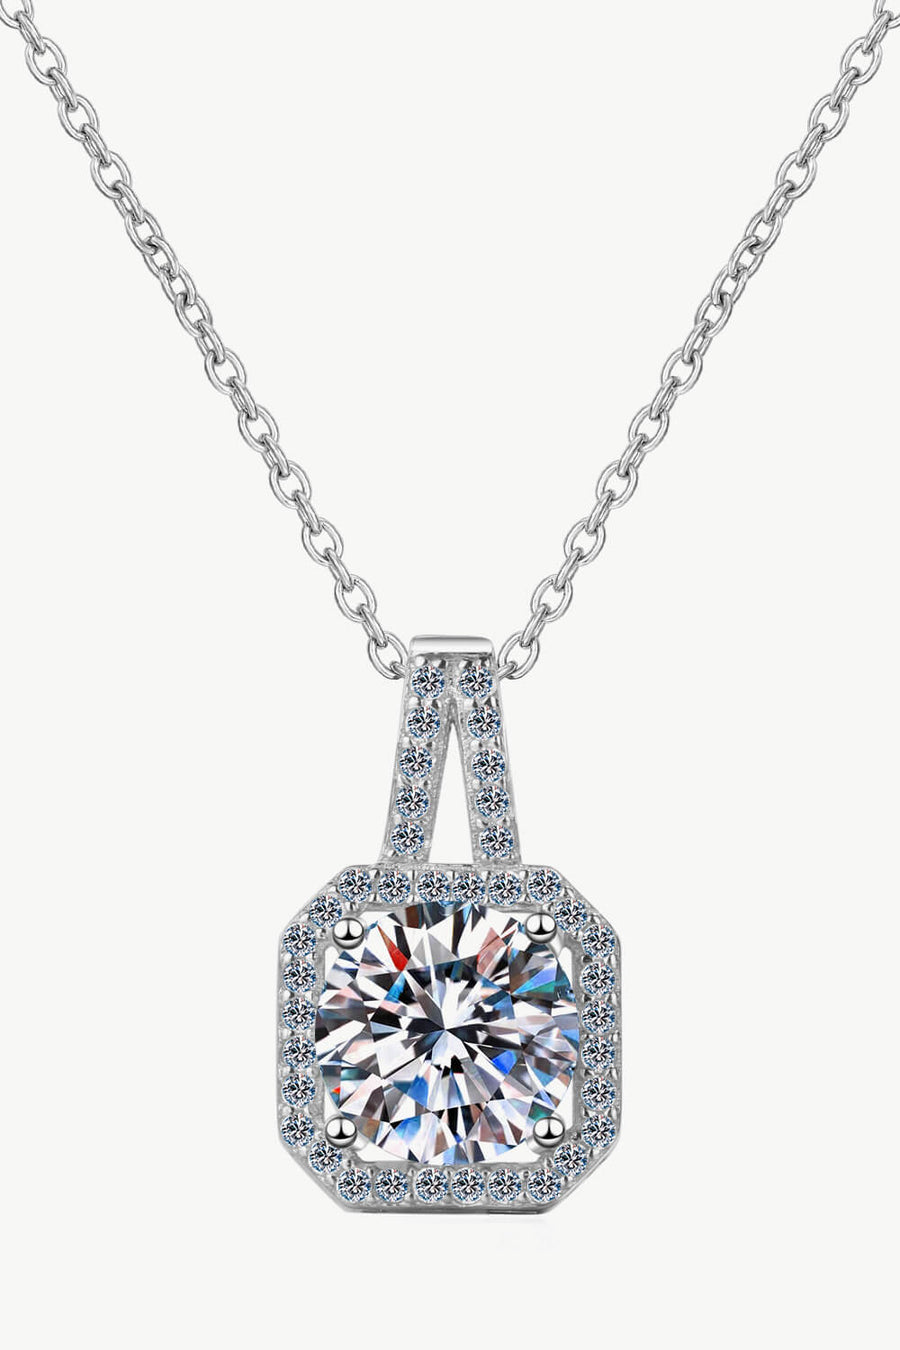 Best Diamond Necklace Jewelry Gifts for Women | 1 Carat Round Diamond Necklace - Halo One Love | MASON New York